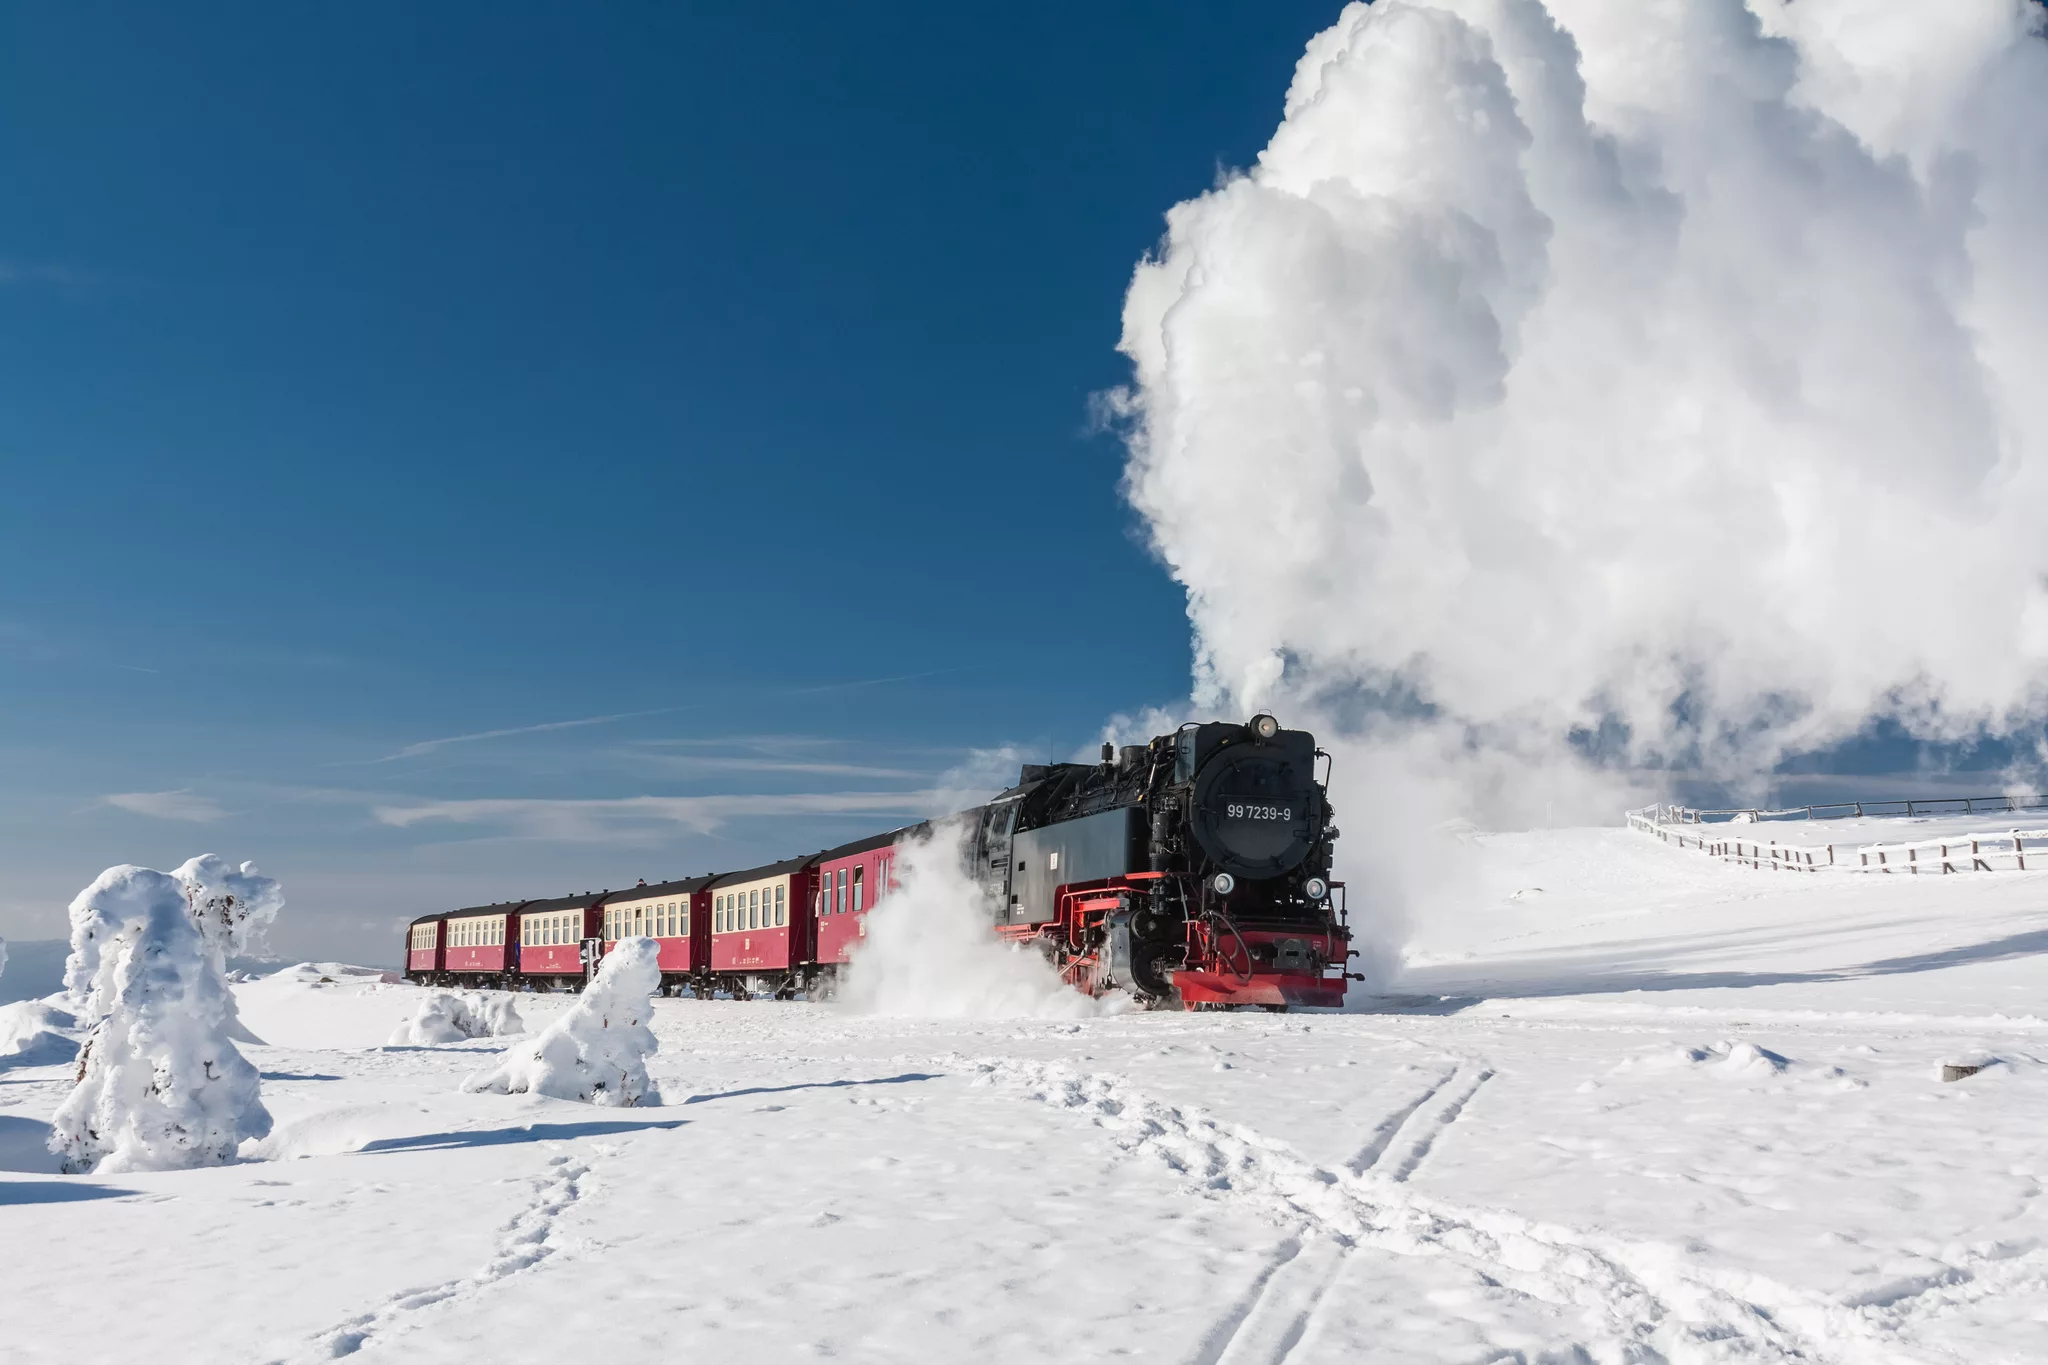 Steam train, Brocken, Harz, Germany